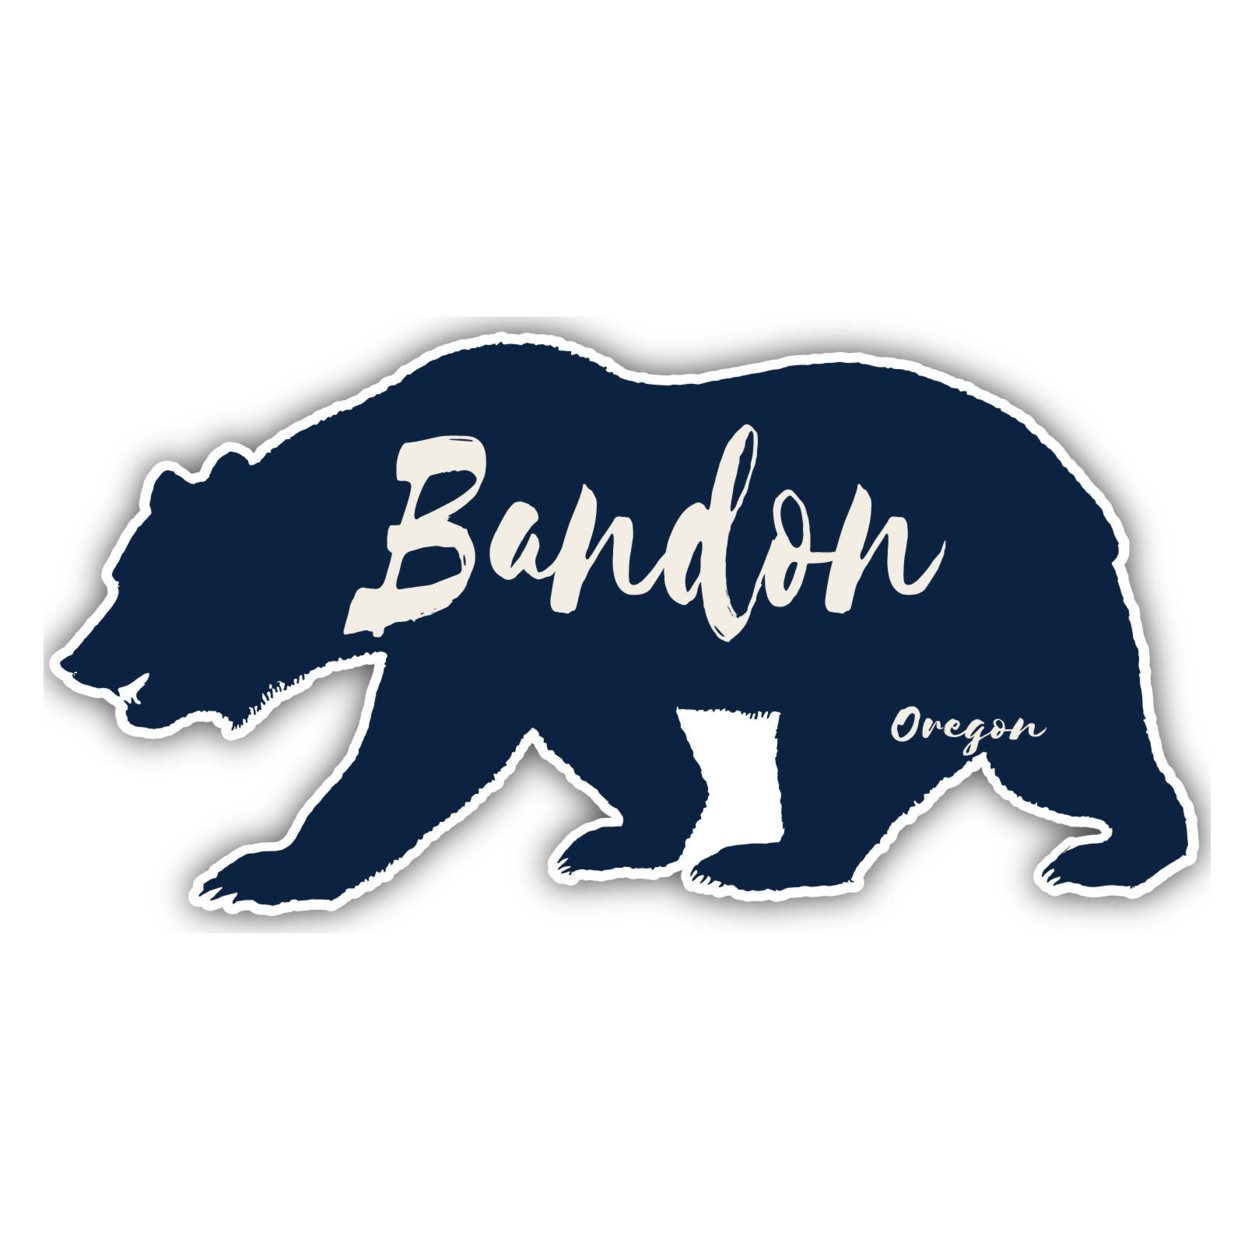 Bandon Oregon Souvenir Decorative Stickers (Choose Theme And Size) - Single Unit, 2-Inch, Bear